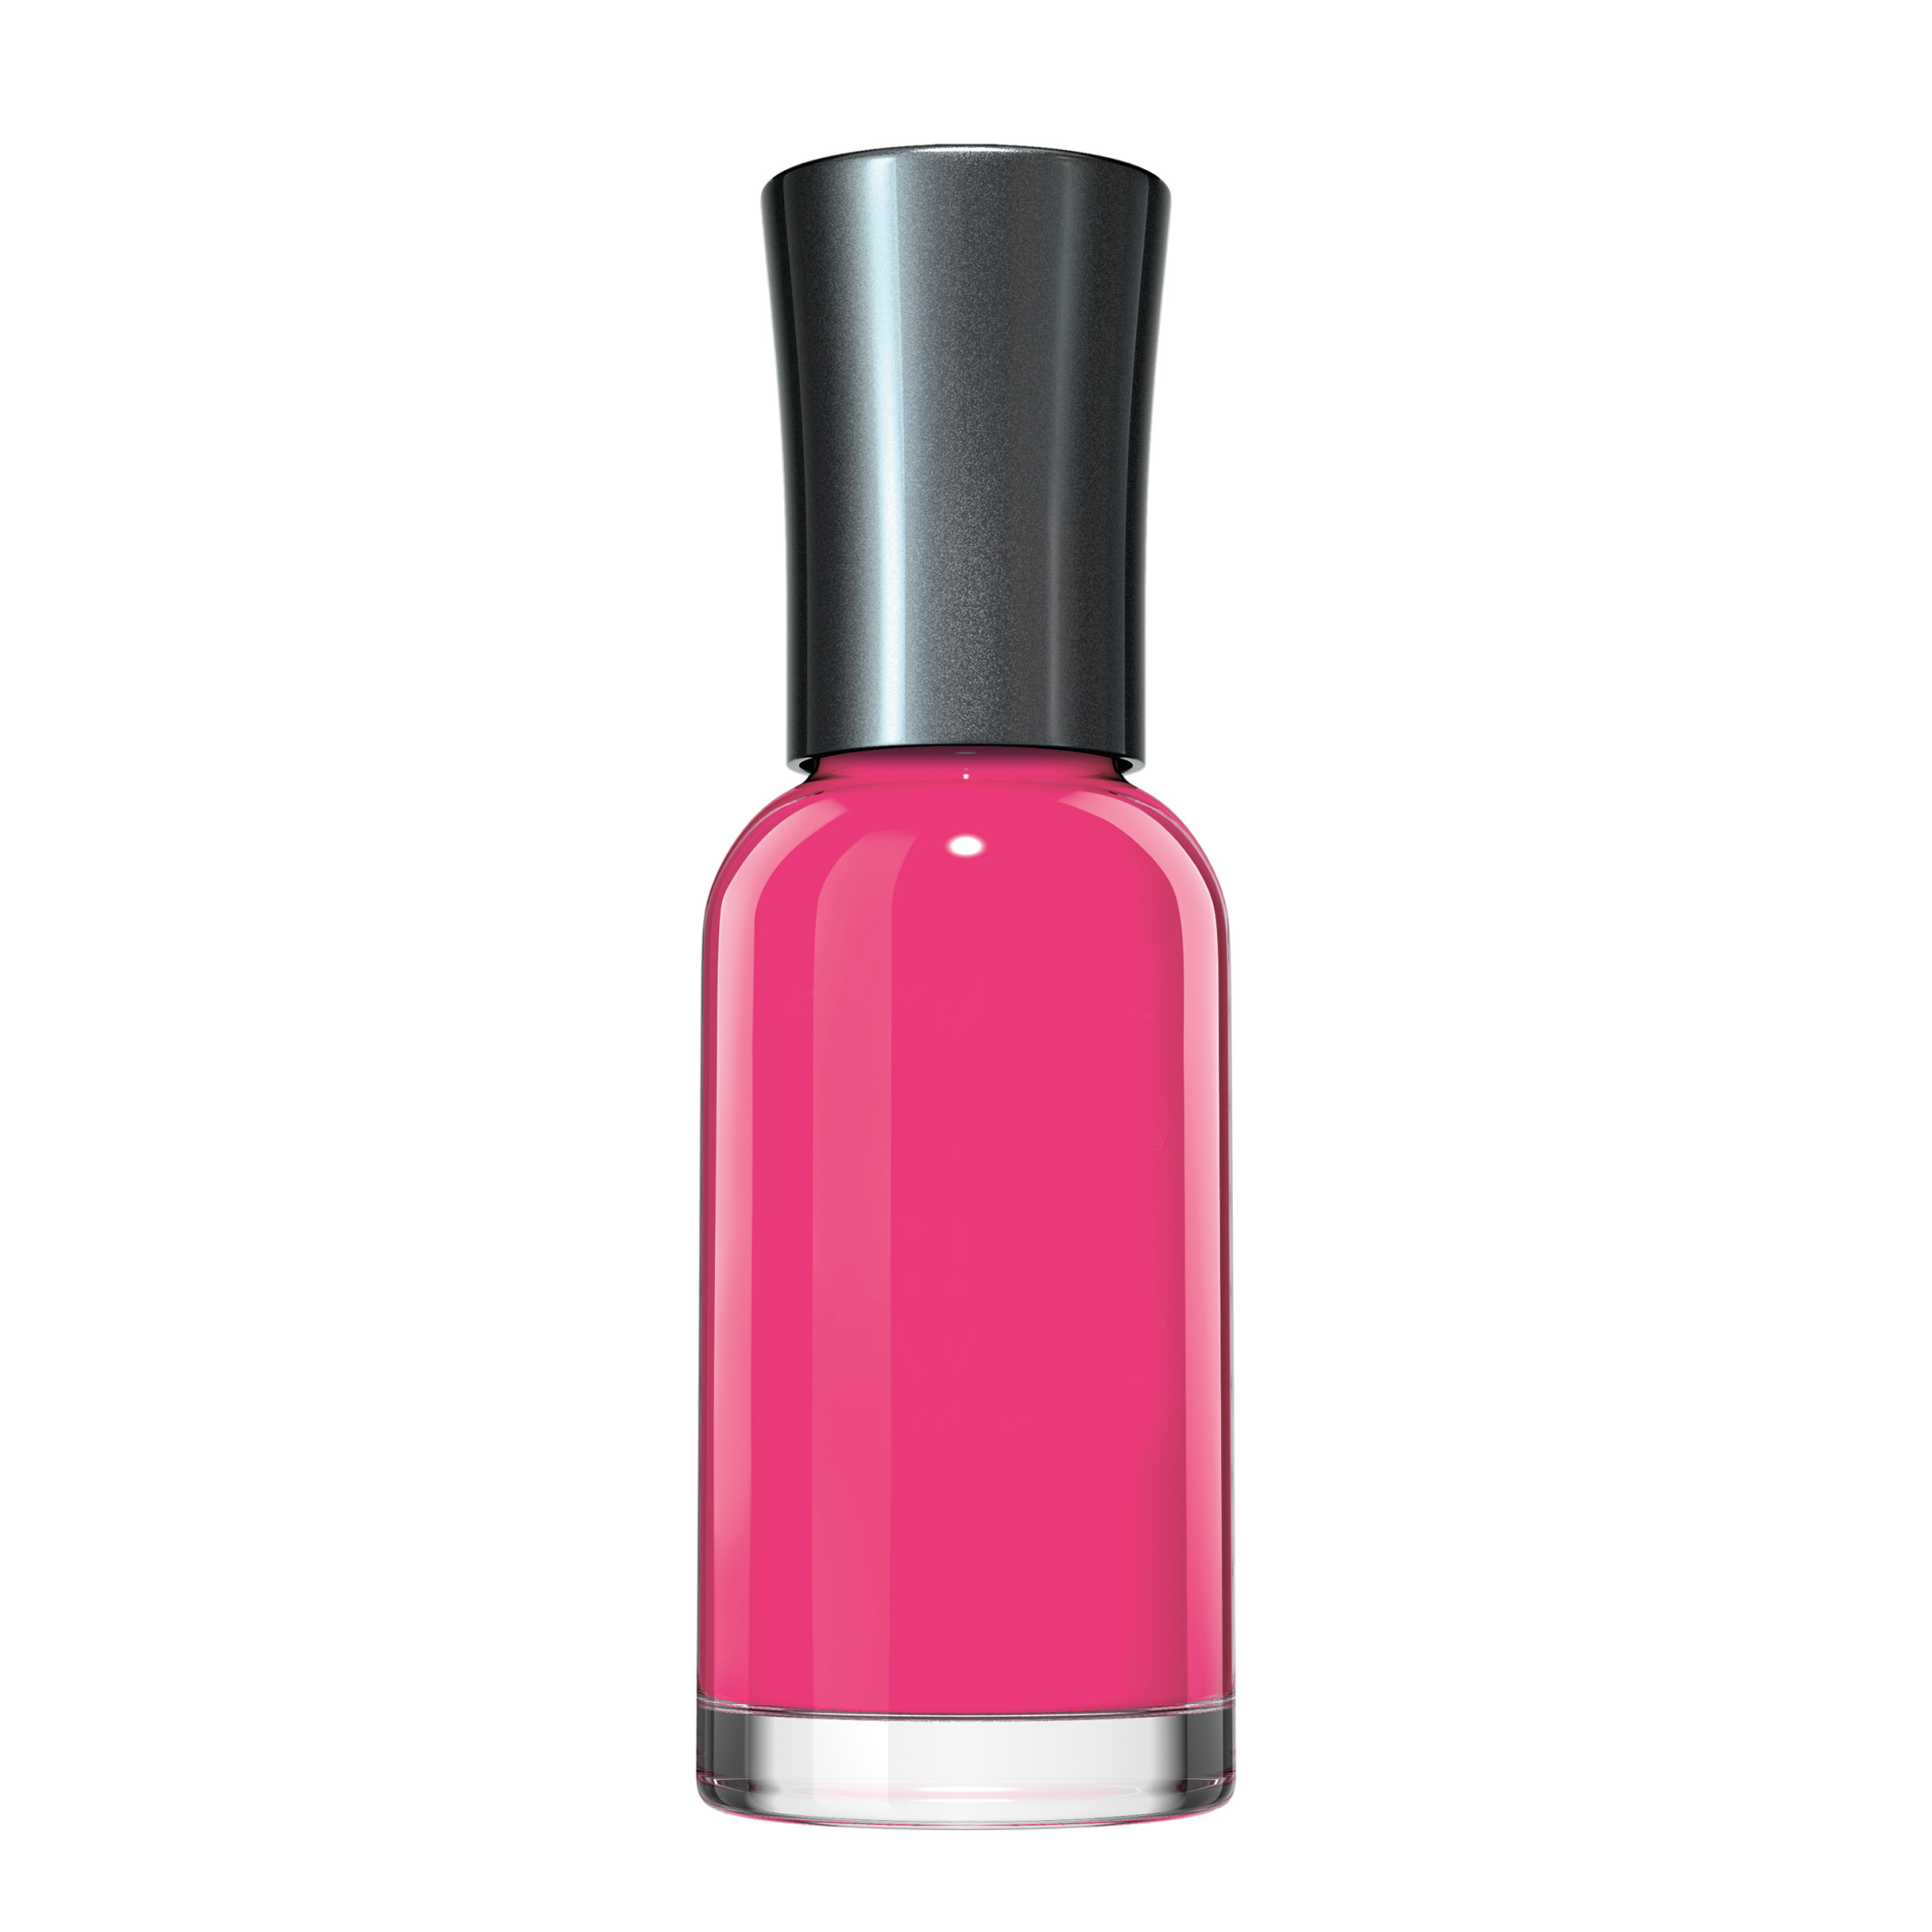 Sally Hansen Xtreme Wear Nail Color, Pink Punk, 0.4 oz, Color Nail Polish, Nail Polish, Quick Dry Nail Polish, Nail Polish Colors, Chip Resistant, Bold Color - image 3 of 10